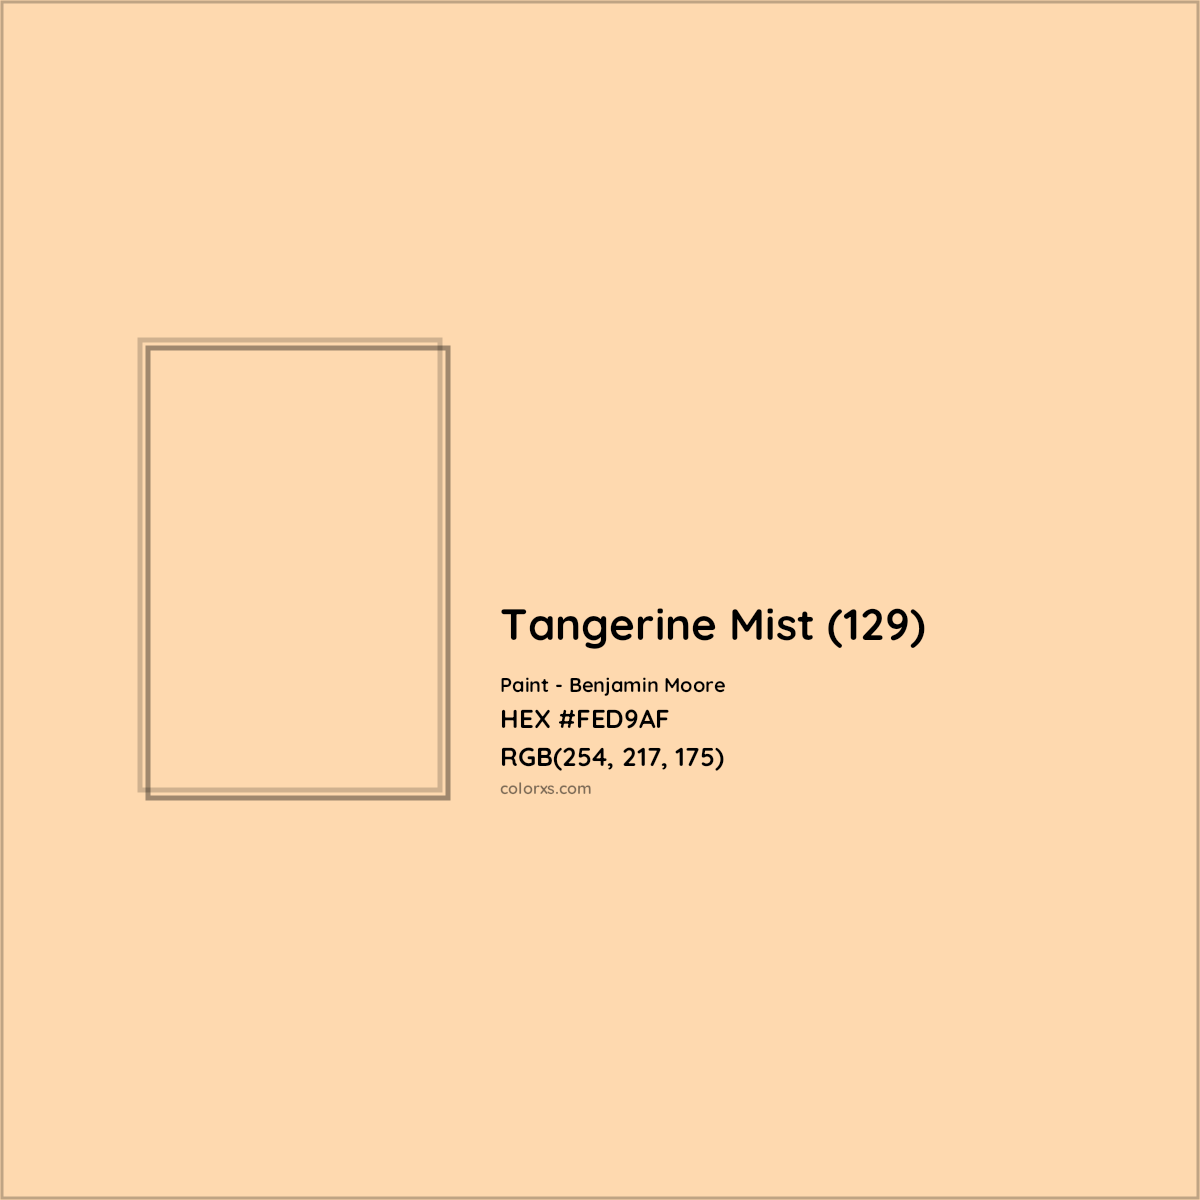 HEX #FED9AF Tangerine Mist (129) Paint Benjamin Moore - Color Code